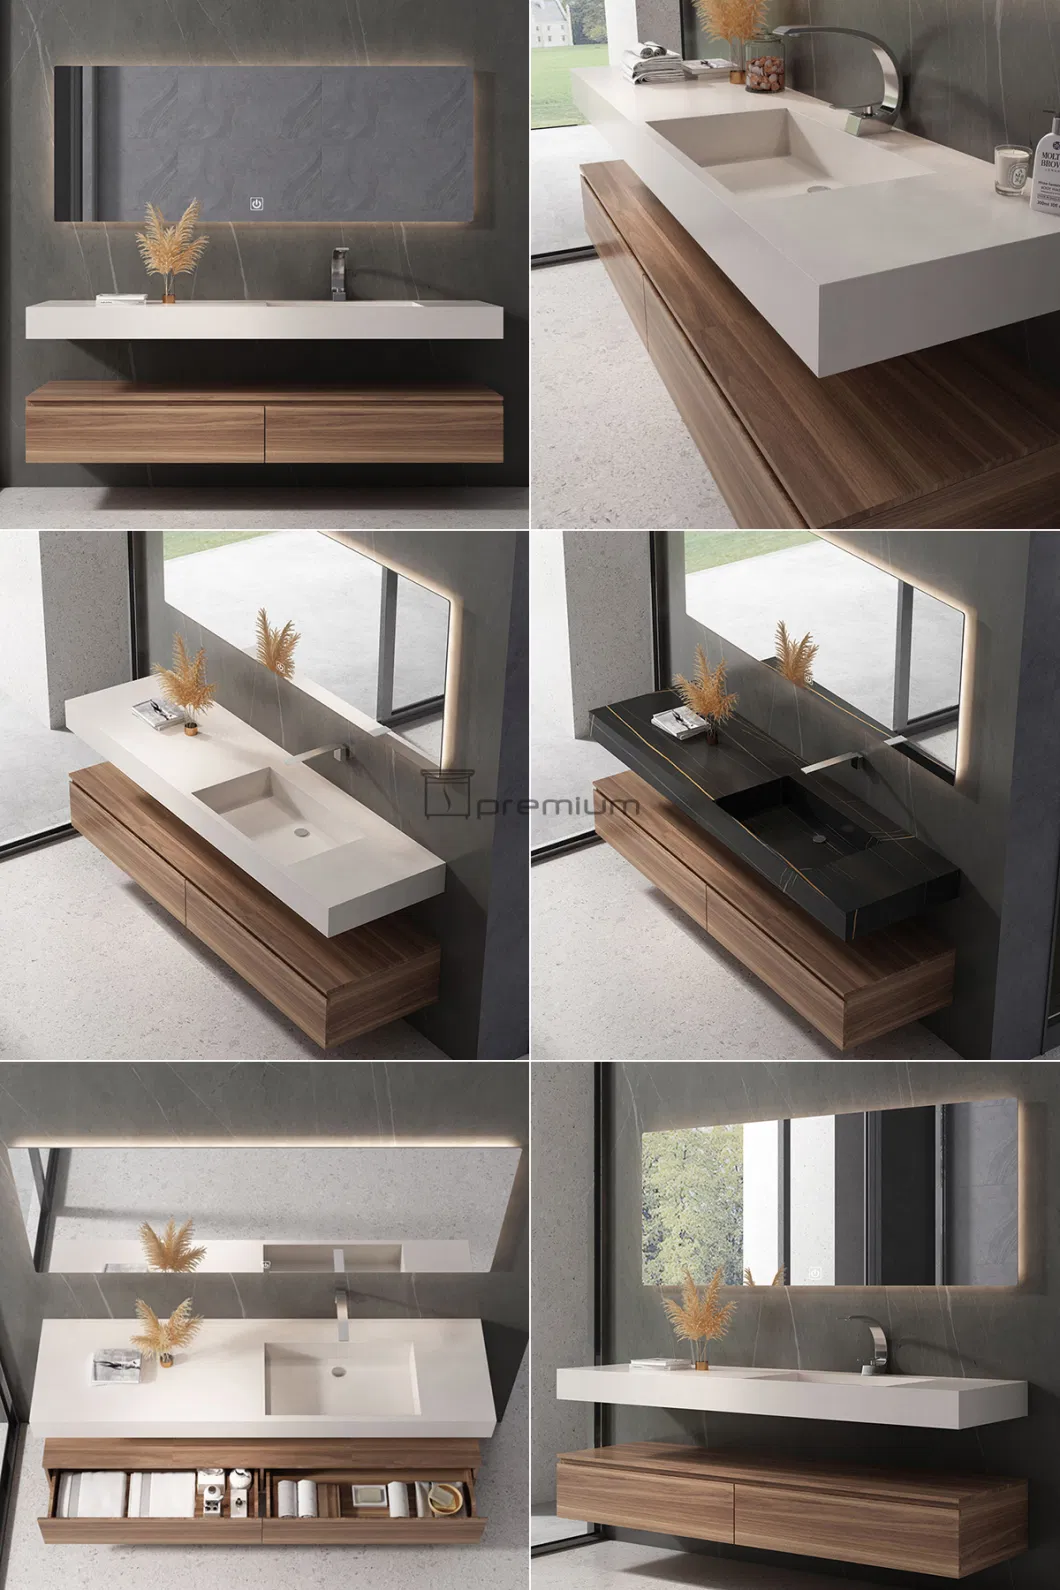 1400mm Width Luxury Modern Design LED Backlit Mirror Sintered Stone Basin Wall Mounted Wooden Bathroom Vanity Cabinet Furniture